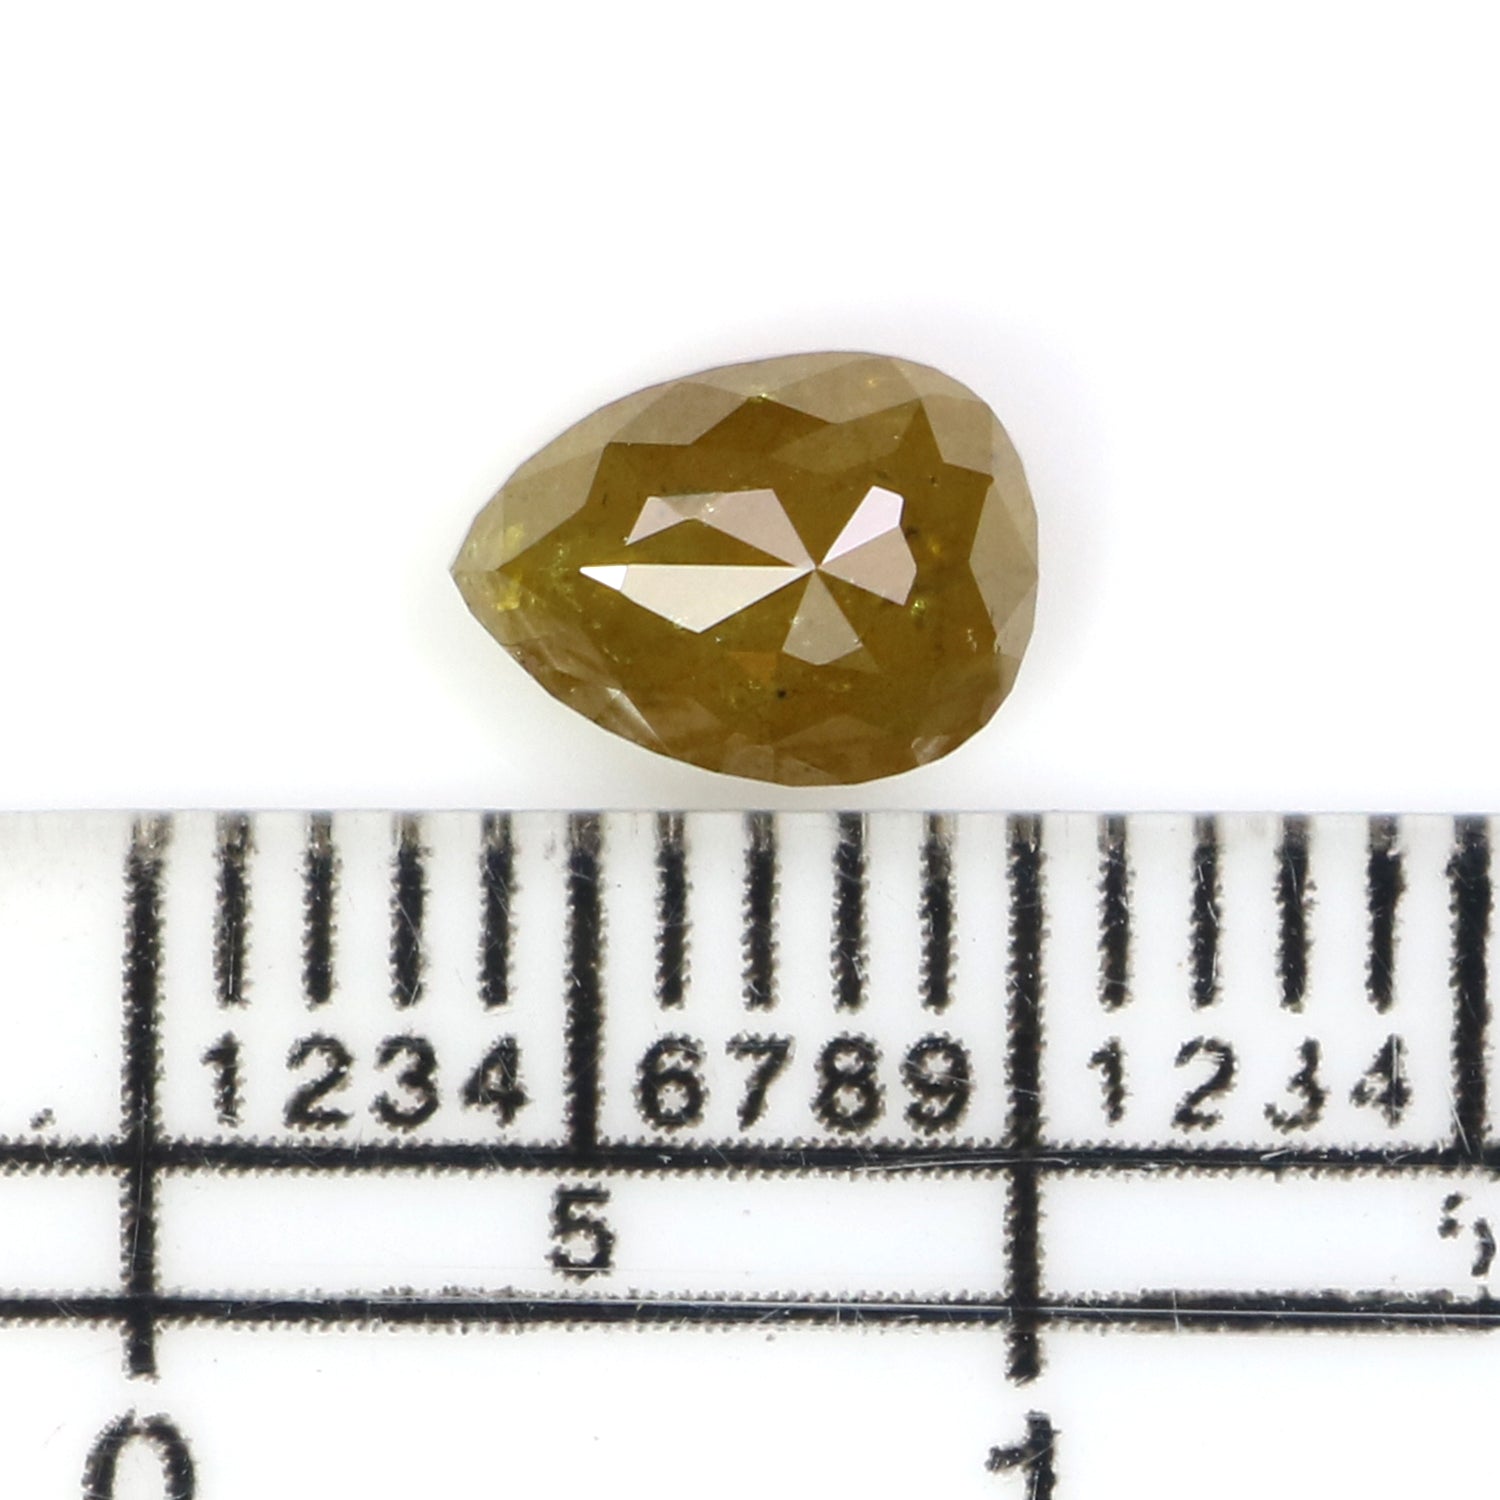 Natural Loose Pear Diamond, Yellow Color Pear Cut Diamond, Natural Loose Diamond, Pear Rose Cut Diamond, 0.93 CT Pear Shape Diamond KDK2680